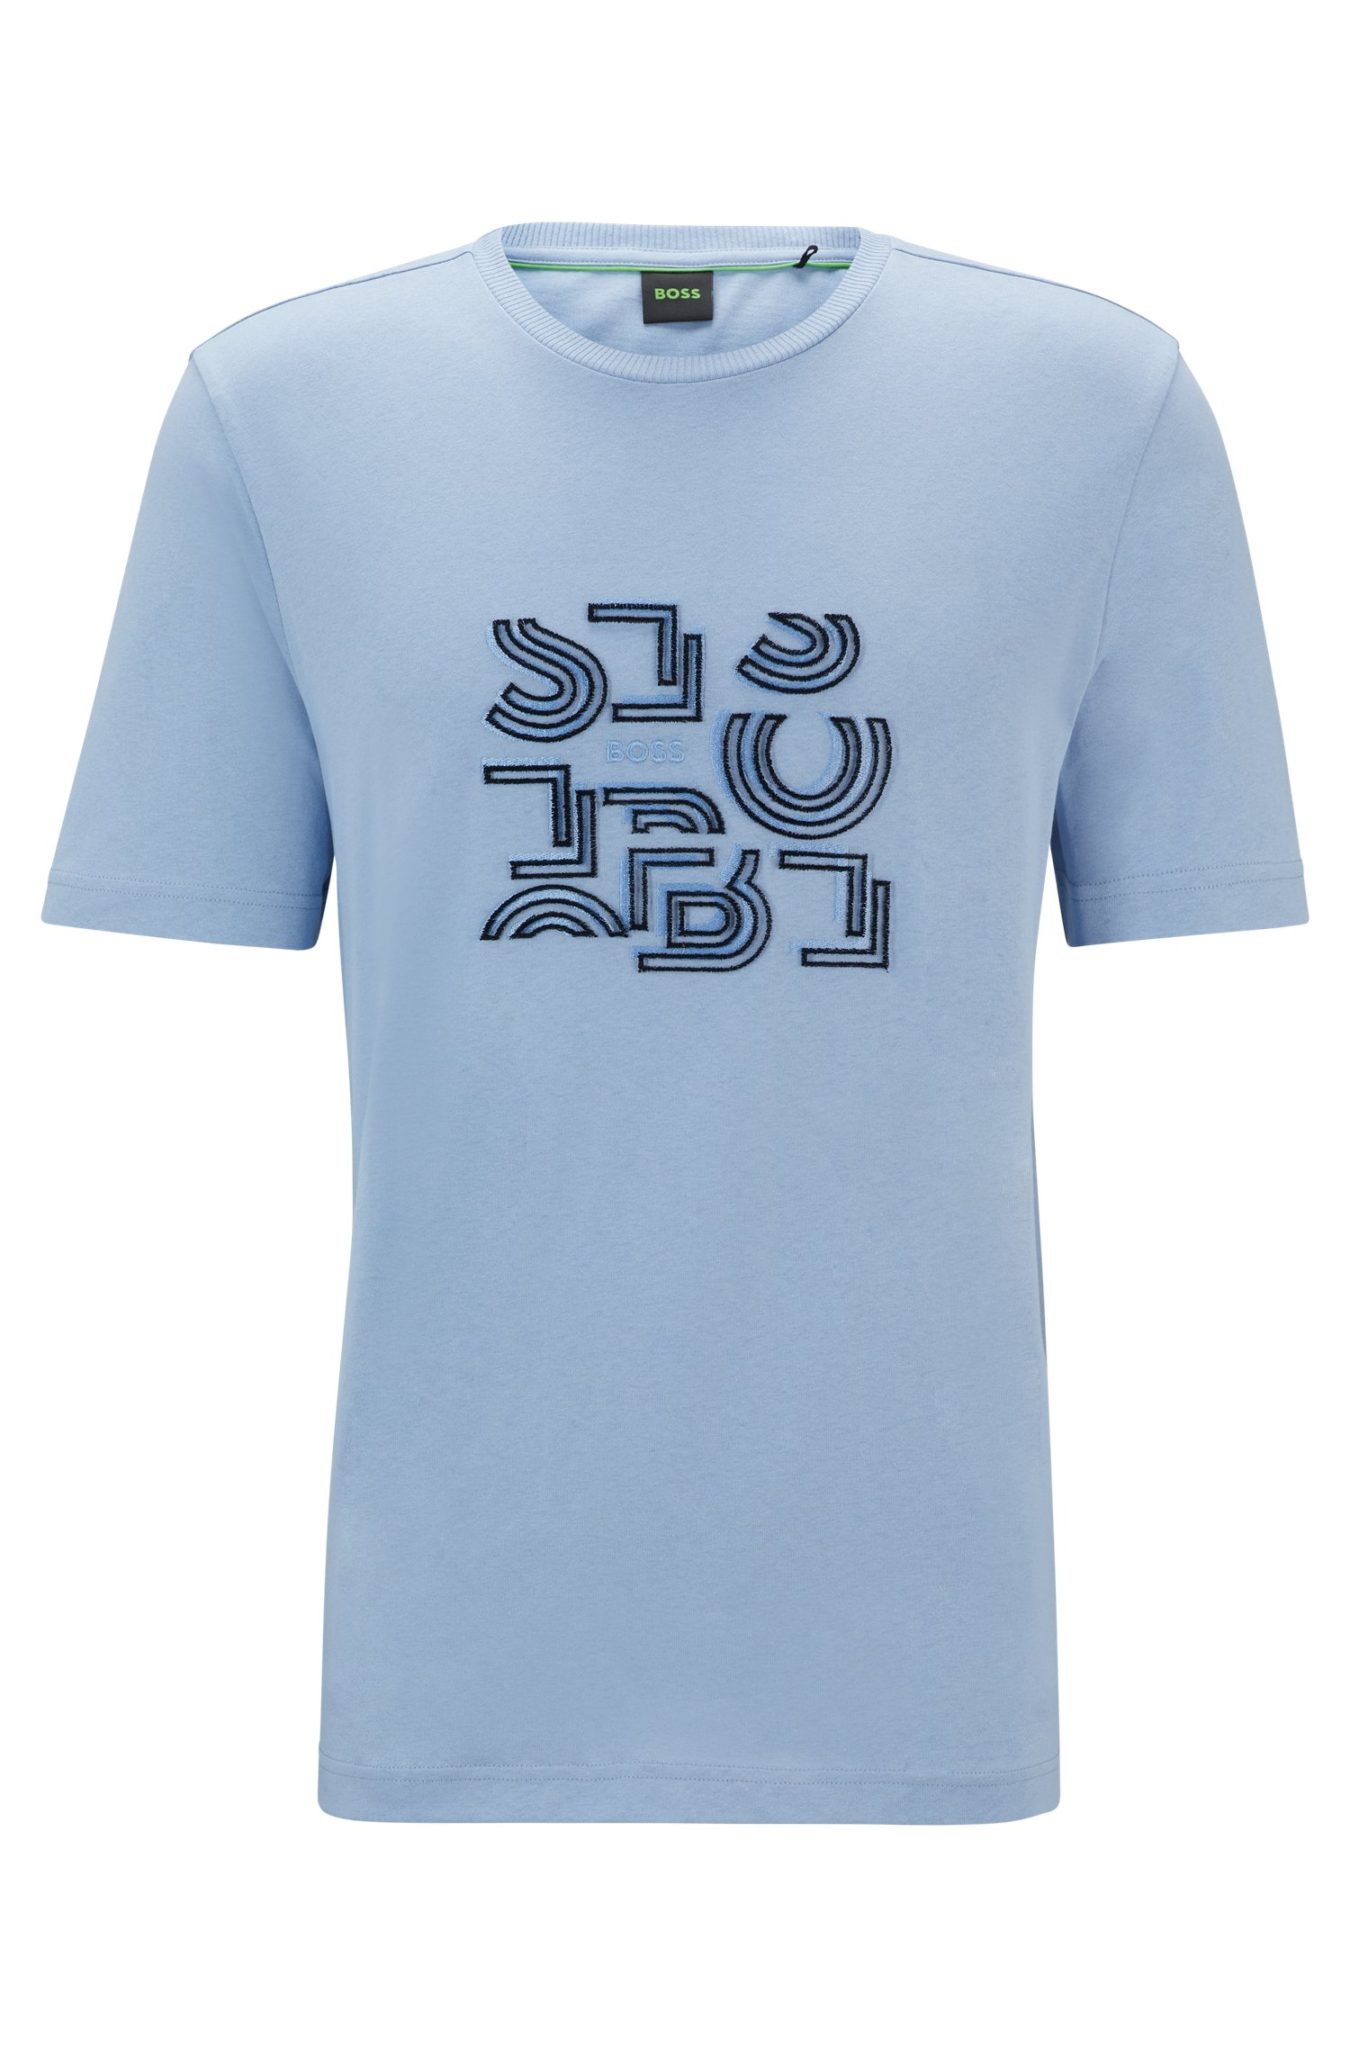 Hugo Boss T-shirt Regular en jersey de coton à motif artistique typographique